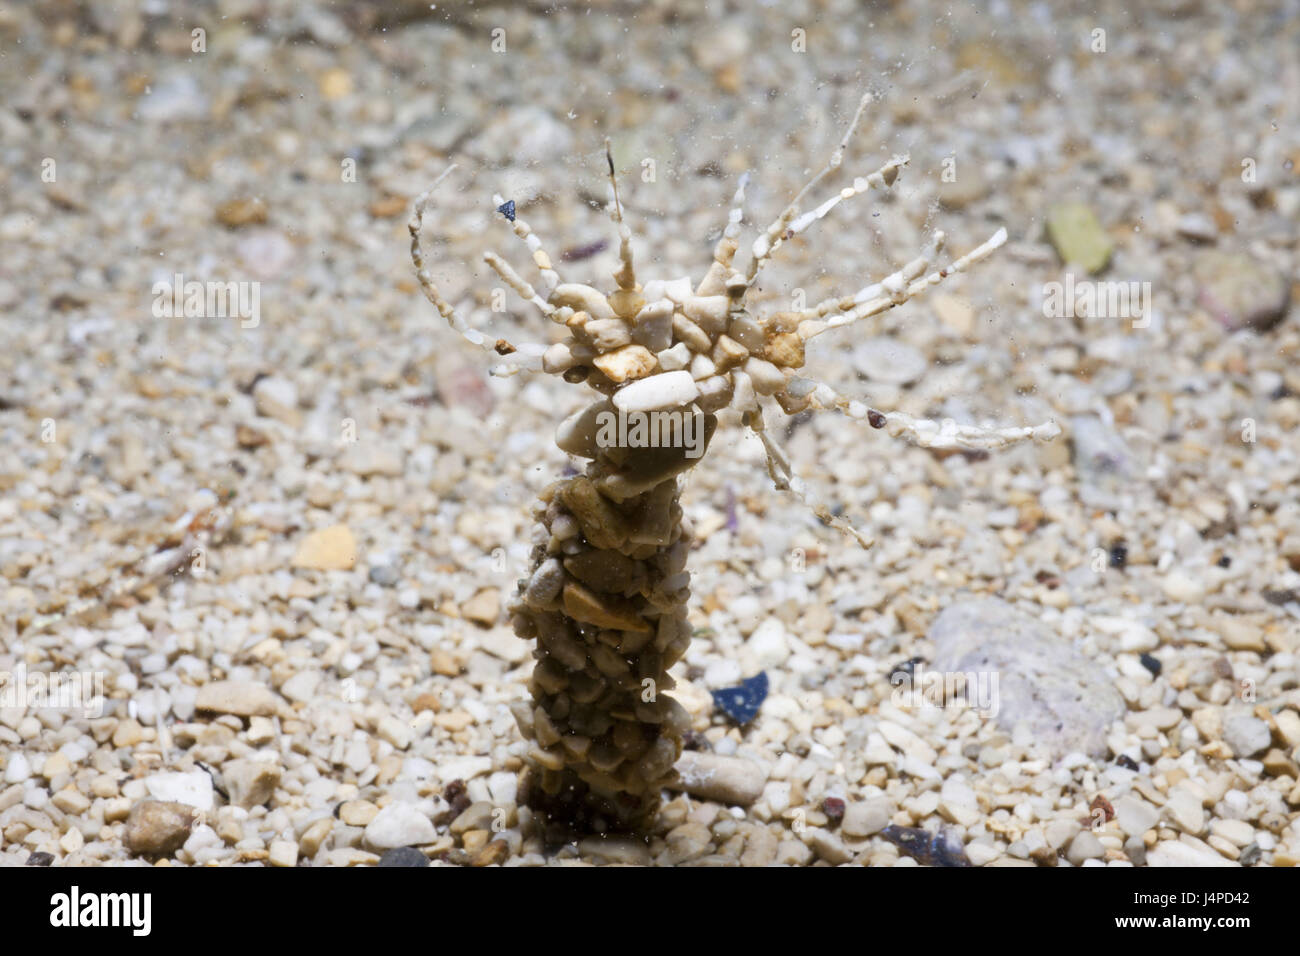 Steinchen-tube worm, Eupolymnia nebulosa, Croatia, Istria, Adriatic, the Mediterranean Sea Stock Photo